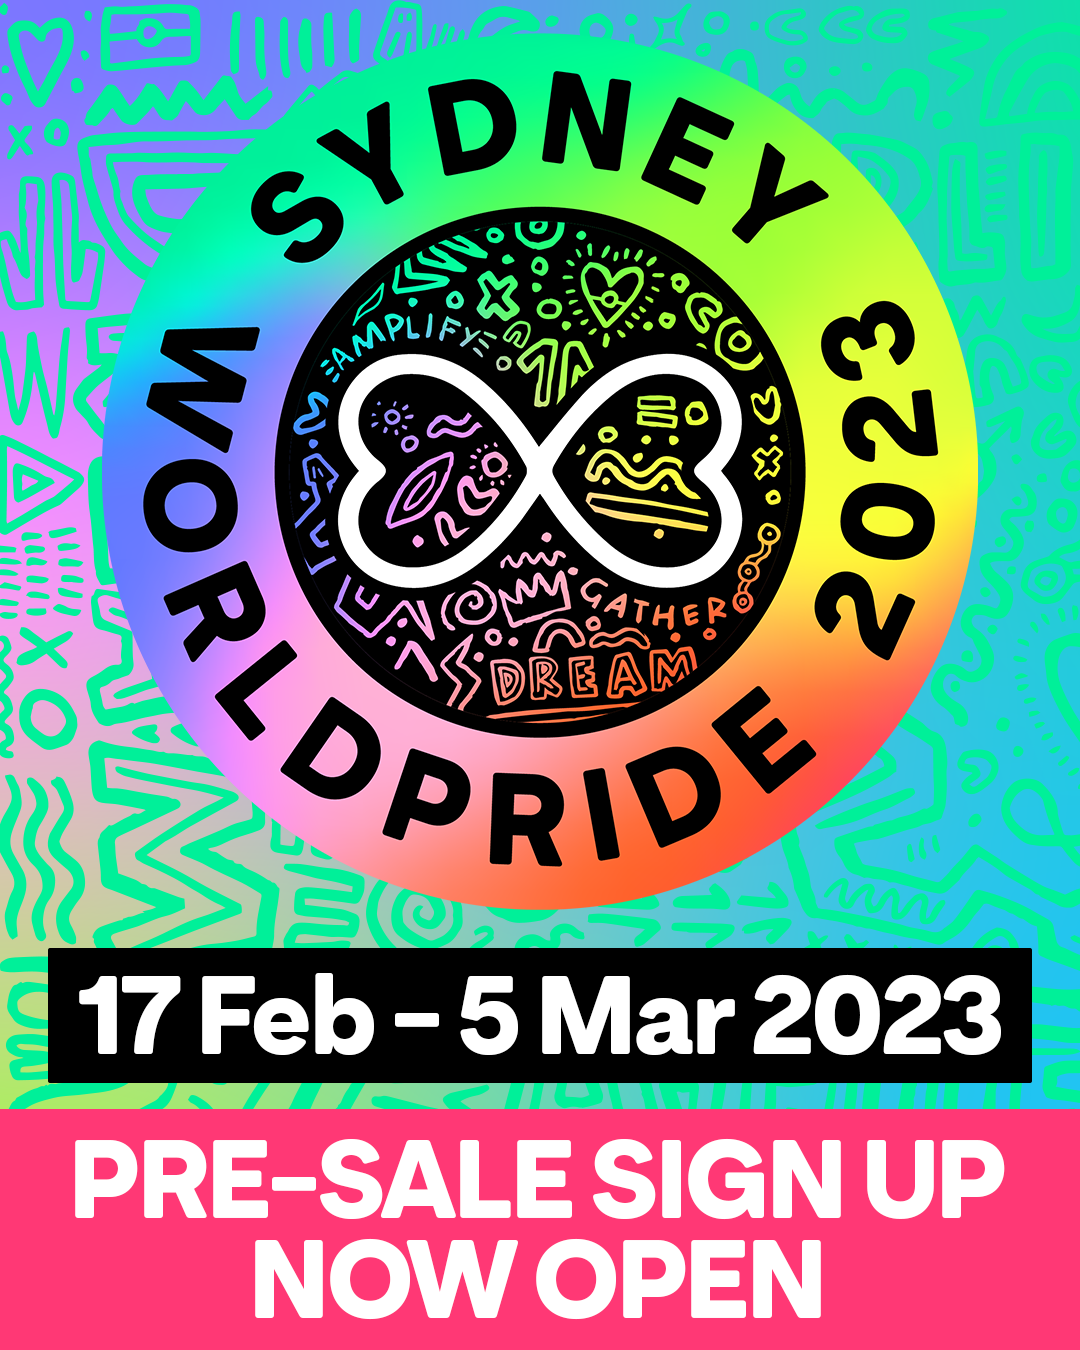 Sydney Word Pride Ad